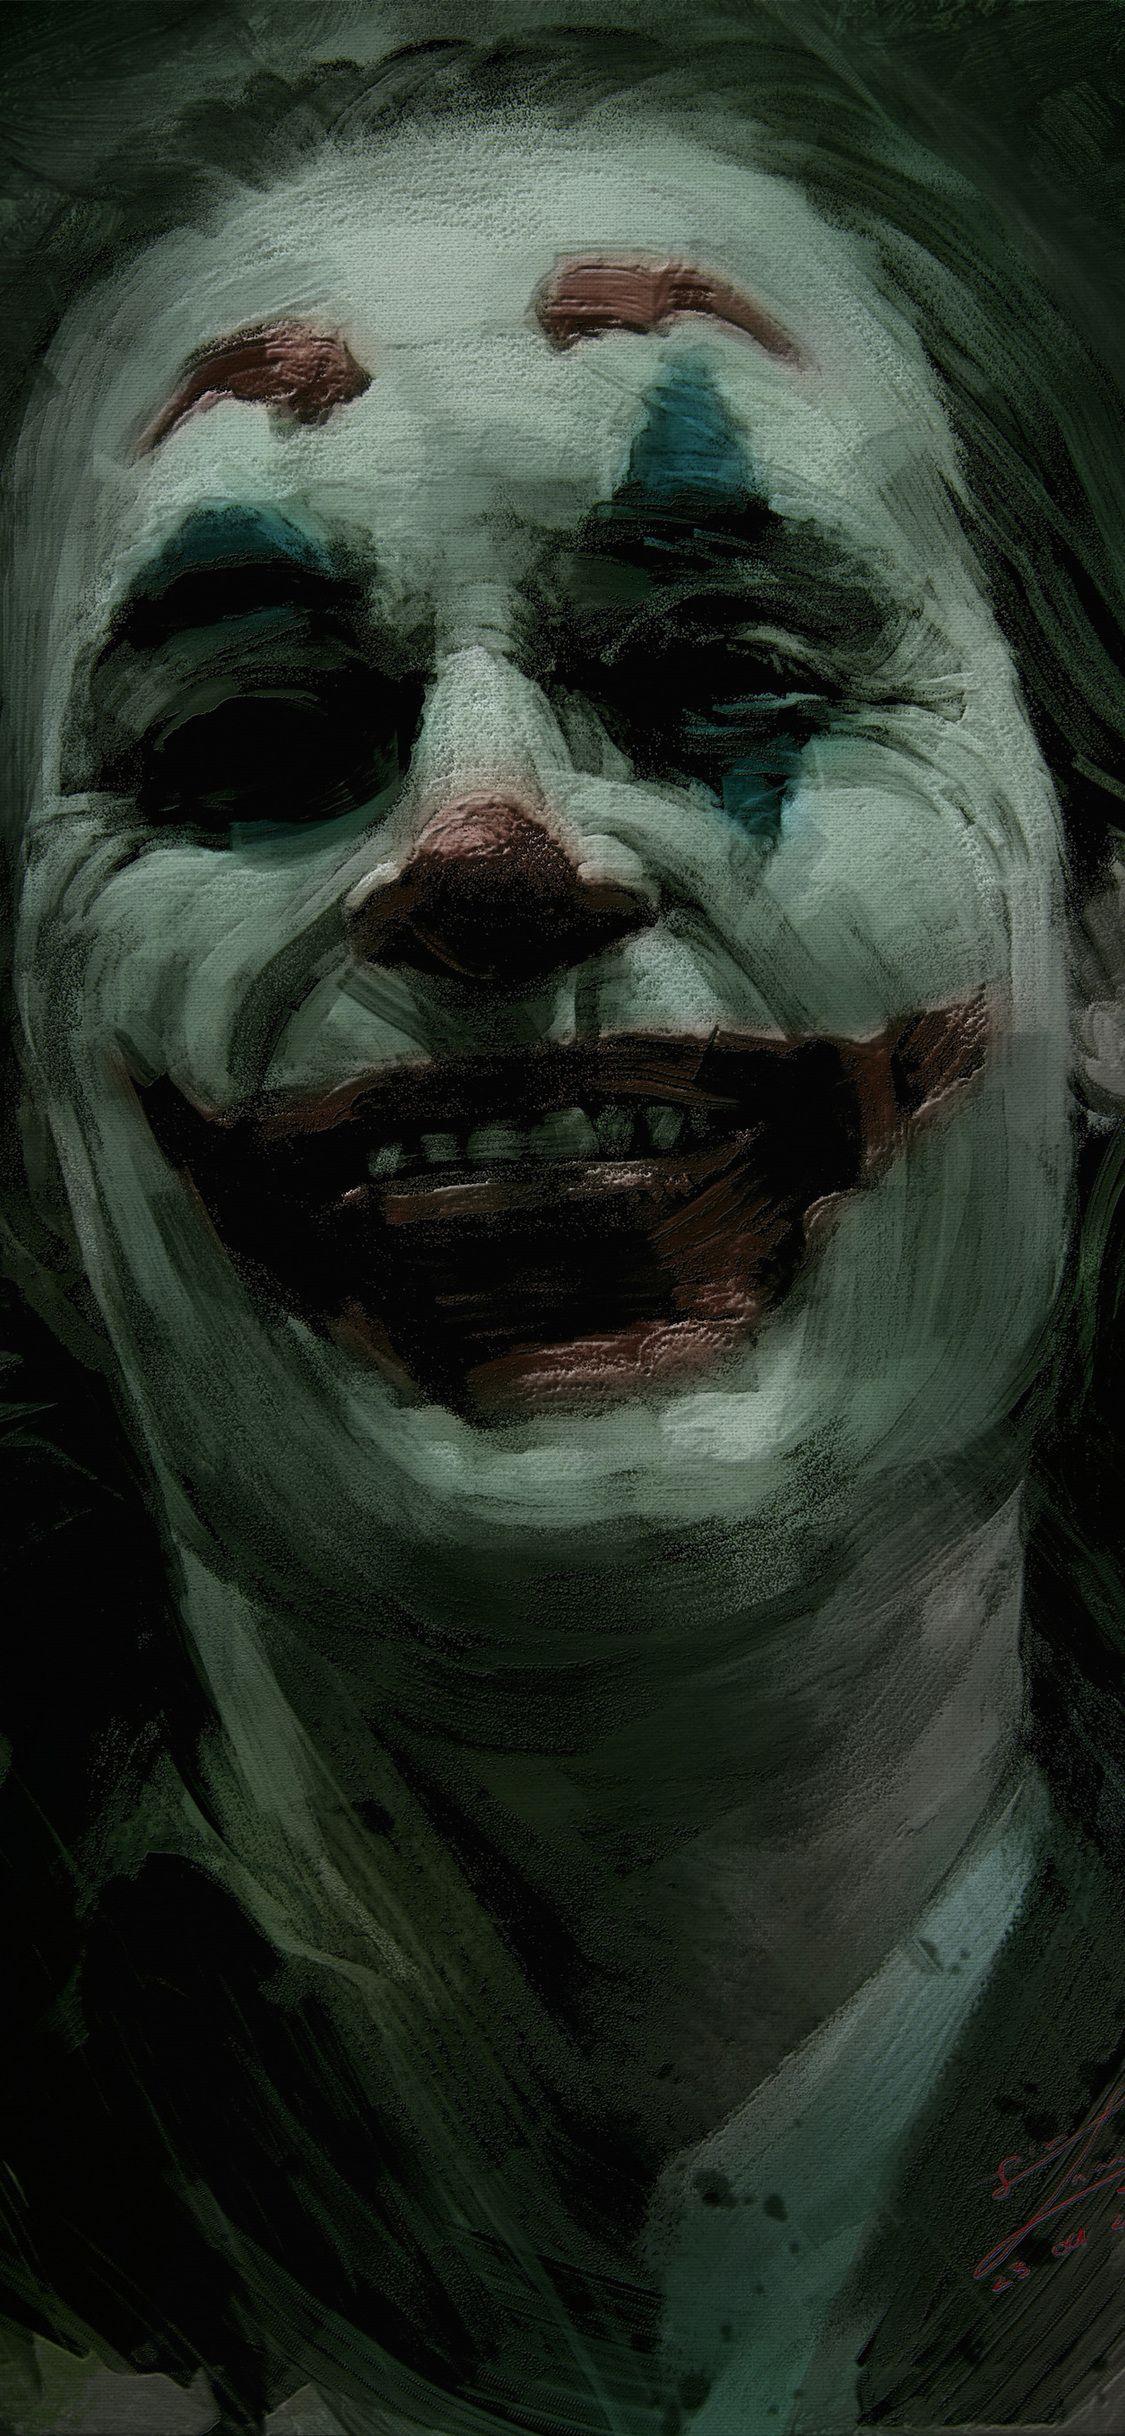 Best Joker Hd Wallpapers 1080p Joker Wallpapers Joker Hd Wallpaper Superhero Wallpaper